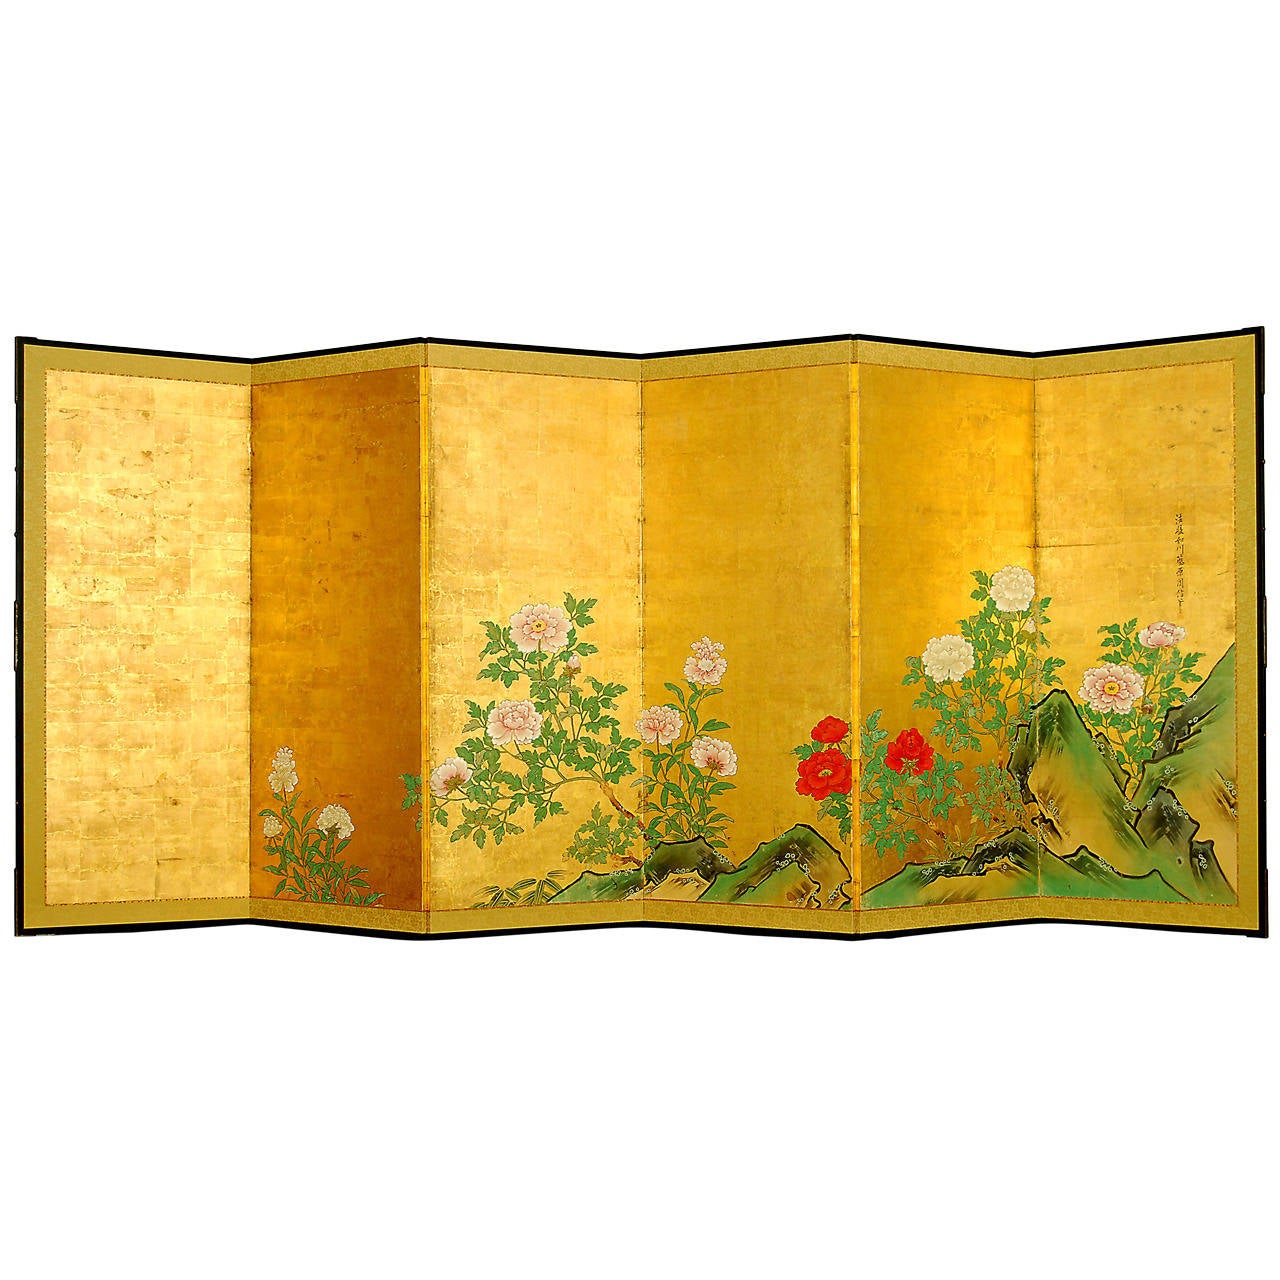 Antique Japanese Six-Panel Screen by Kano Chikanobu "Shushin"